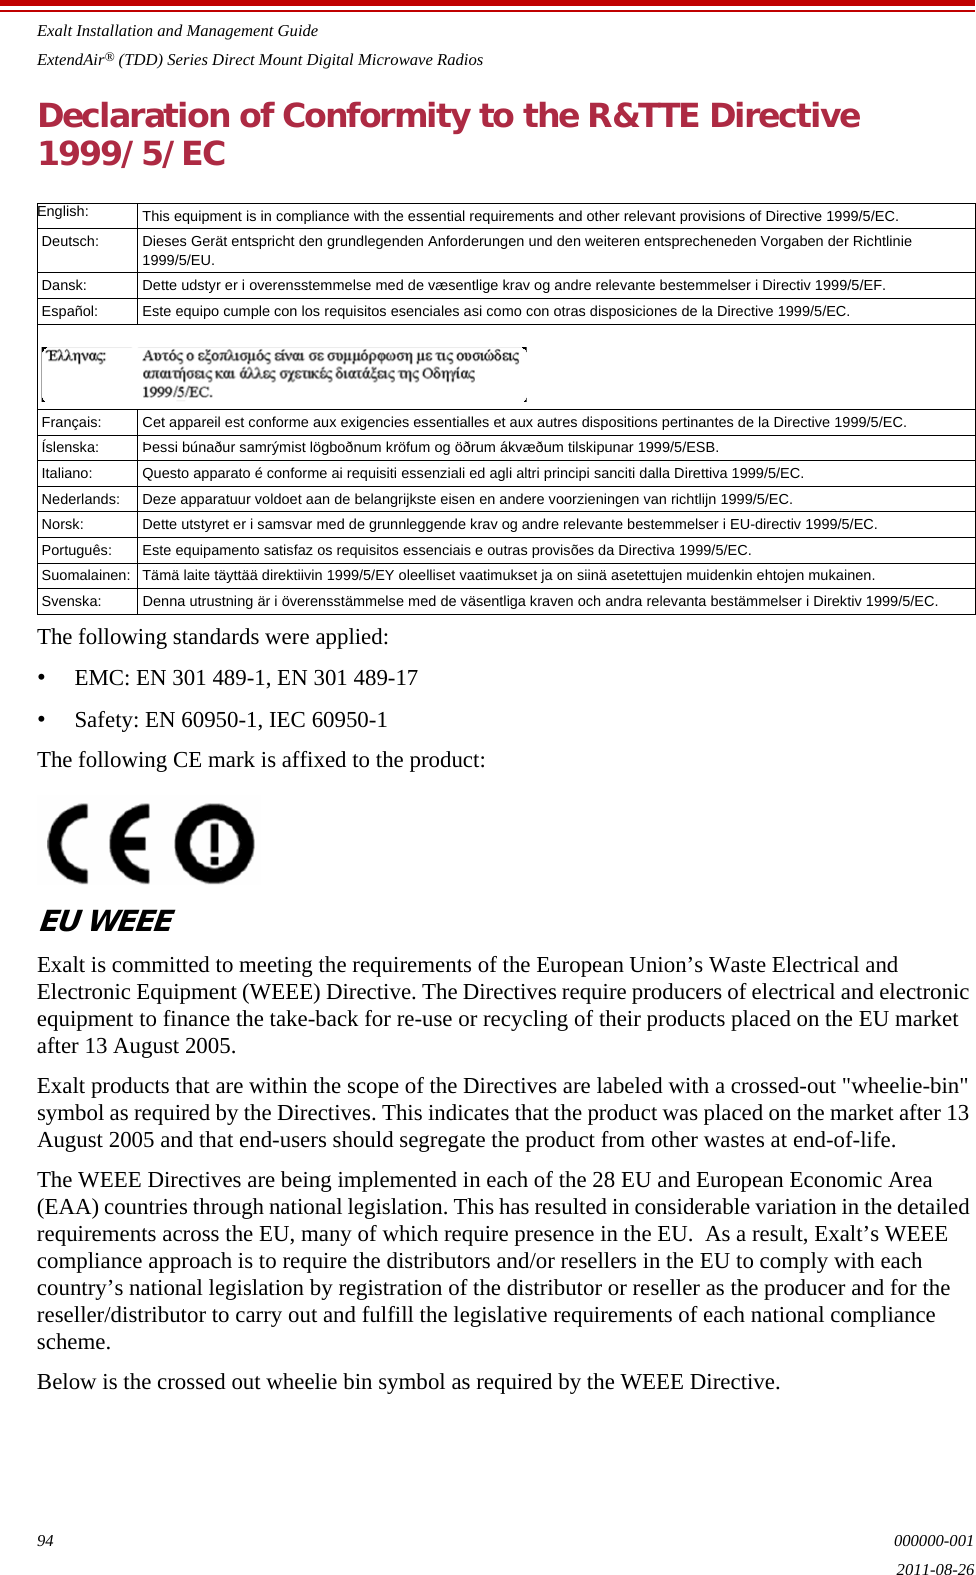 Exalt Installation and Management GuideExtendAir® (TDD) Series Direct Mount Digital Microwave Radios94 000000-0012011-08-26Declaration of Conformity to the R&amp;TTE Directive1999/5/EC The following standards were applied:•EMC: EN 301 489-1, EN 301 489-17 •Safety: EN 60950-1, IEC 60950-1The following CE mark is affixed to the product:EU WEEEExalt is committed to meeting the requirements of the European Union’s Waste Electrical and Electronic Equipment (WEEE) Directive. The Directives require producers of electrical and electronic equipment to finance the take-back for re-use or recycling of their products placed on the EU market after 13 August 2005. Exalt products that are within the scope of the Directives are labeled with a crossed-out &quot;wheelie-bin&quot; symbol as required by the Directives. This indicates that the product was placed on the market after 13 August 2005 and that end-users should segregate the product from other wastes at end-of-life.The WEEE Directives are being implemented in each of the 28 EU and European Economic Area (EAA) countries through national legislation. This has resulted in considerable variation in the detailed requirements across the EU, many of which require presence in the EU.  As a result, Exalt’s WEEE compliance approach is to require the distributors and/or resellers in the EU to comply with each country’s national legislation by registration of the distributor or reseller as the producer and for the reseller/distributor to carry out and fulfill the legislative requirements of each national compliance scheme.Below is the crossed out wheelie bin symbol as required by the WEEE Directive.English:  This equipment is in compliance with the essential requirements and other relevant provisions of Directive 1999/5/EC. Deutsch:  Dieses Gerät entspricht den grundlegenden Anforderungen und den weiteren entsprecheneden Vorgaben der Richtlinie1999/5/EU. Dansk:  Dette udstyr er i overensstemmelse med de væsentlige krav og andre relevante bestemmelser i Directiv 1999/5/EF. Español:  Este equipo cumple con los requisitos esenciales asi como con otras disposiciones de la Directive 1999/5/EC. Français:  Cet appareil est conforme aux exigencies essentialles et aux autres dispositions pertinantes de la Directive 1999/5/EC. Íslenska:  Þessi búnaður samrýmist lögboðnum kröfum og öðrum ákvæðum tilskipunar 1999/5/ESB. Italiano:  Questo apparato é conforme ai requisiti essenziali ed agli altri principi sanciti dalla Direttiva 1999/5/EC. Nederlands:  Deze apparatuur voldoet aan de belangrijkste eisen en andere voorzieningen van richtlijn 1999/5/EC. Norsk:  Dette utstyret er i samsvar med de grunnleggende krav og andre relevante bestemmelser i EU-directiv 1999/5/EC. Português: Este equipamento satisfaz os requisitos essenciais e outras provisões da Directiva 1999/5/EC. Suomalainen:  Tämä laite täyttää direktiivin 1999/5/EY oleelliset vaatimukset ja on siinä asetettujen muidenkin ehtojen mukainen. Svenska:  Denna utrustning är i överensstämmelse med de väsentliga kraven och andra relevanta bestämmelser i Direktiv 1999/5/EC. 